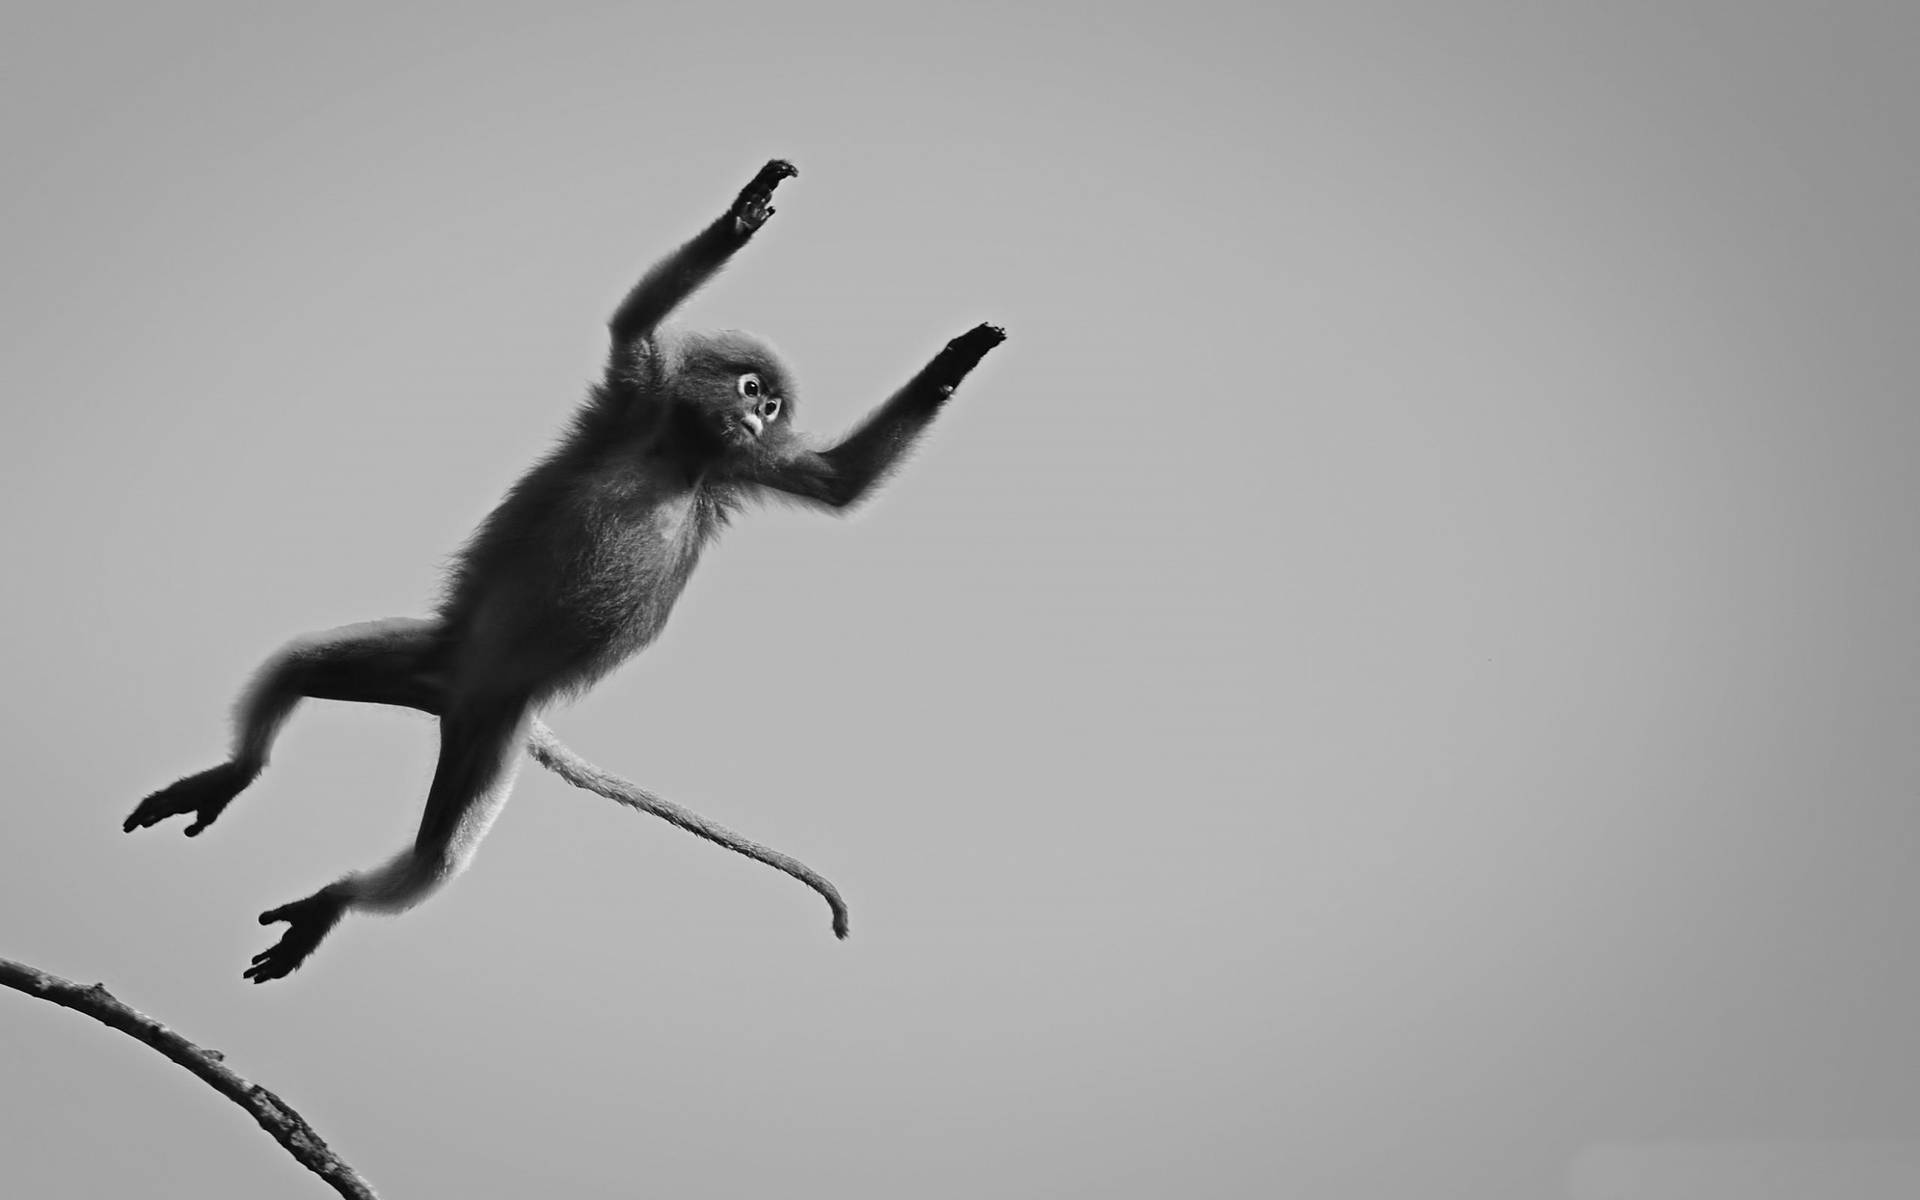 Black Monkey Jumping From Stick Wallpaper